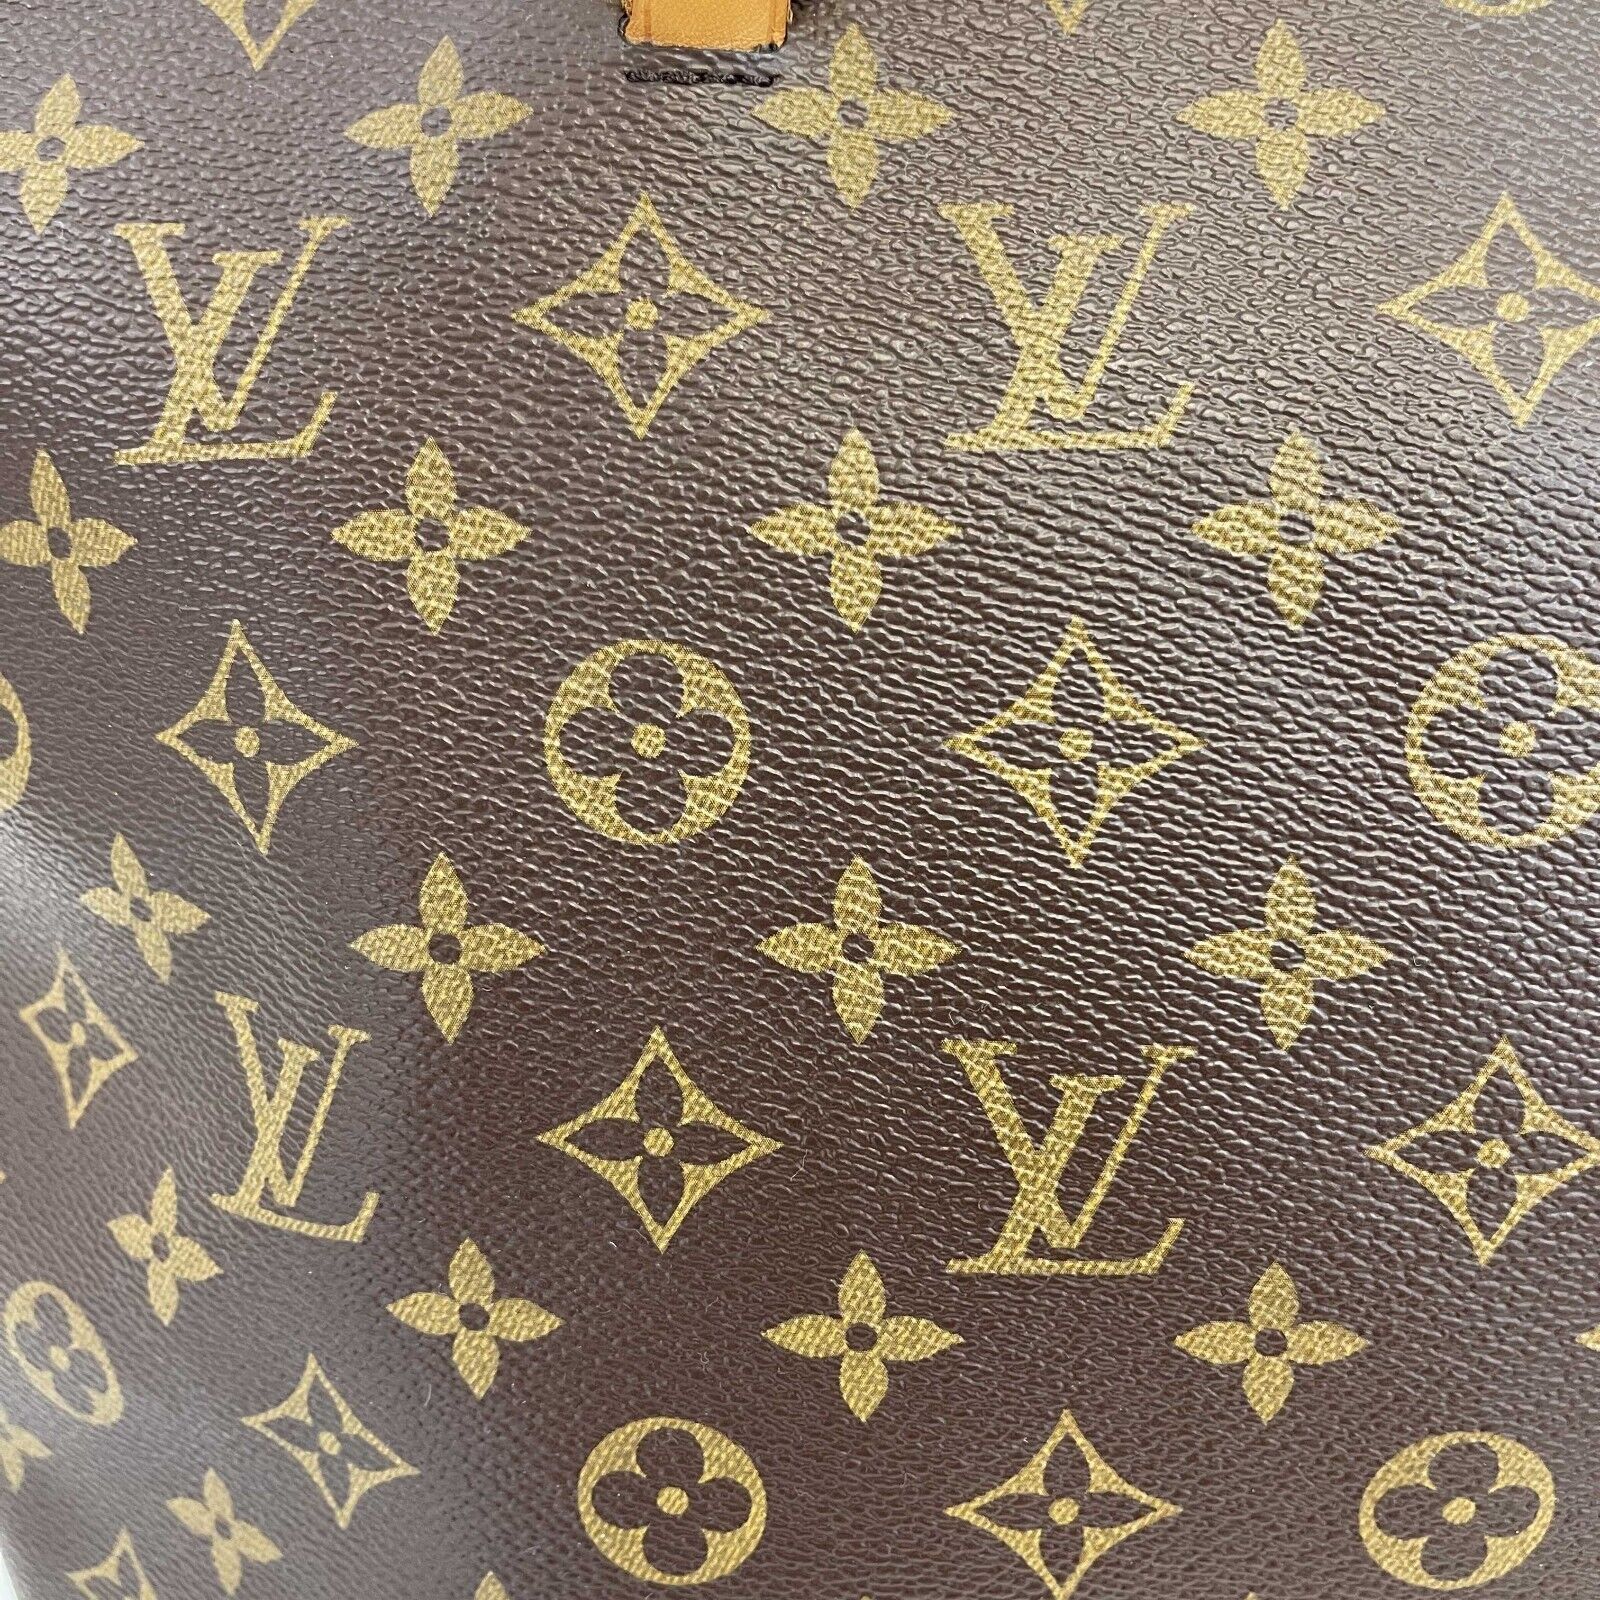 Louis Vuitton Damier Ebene Siena MM - Brown Totes, Handbags - LOU720494